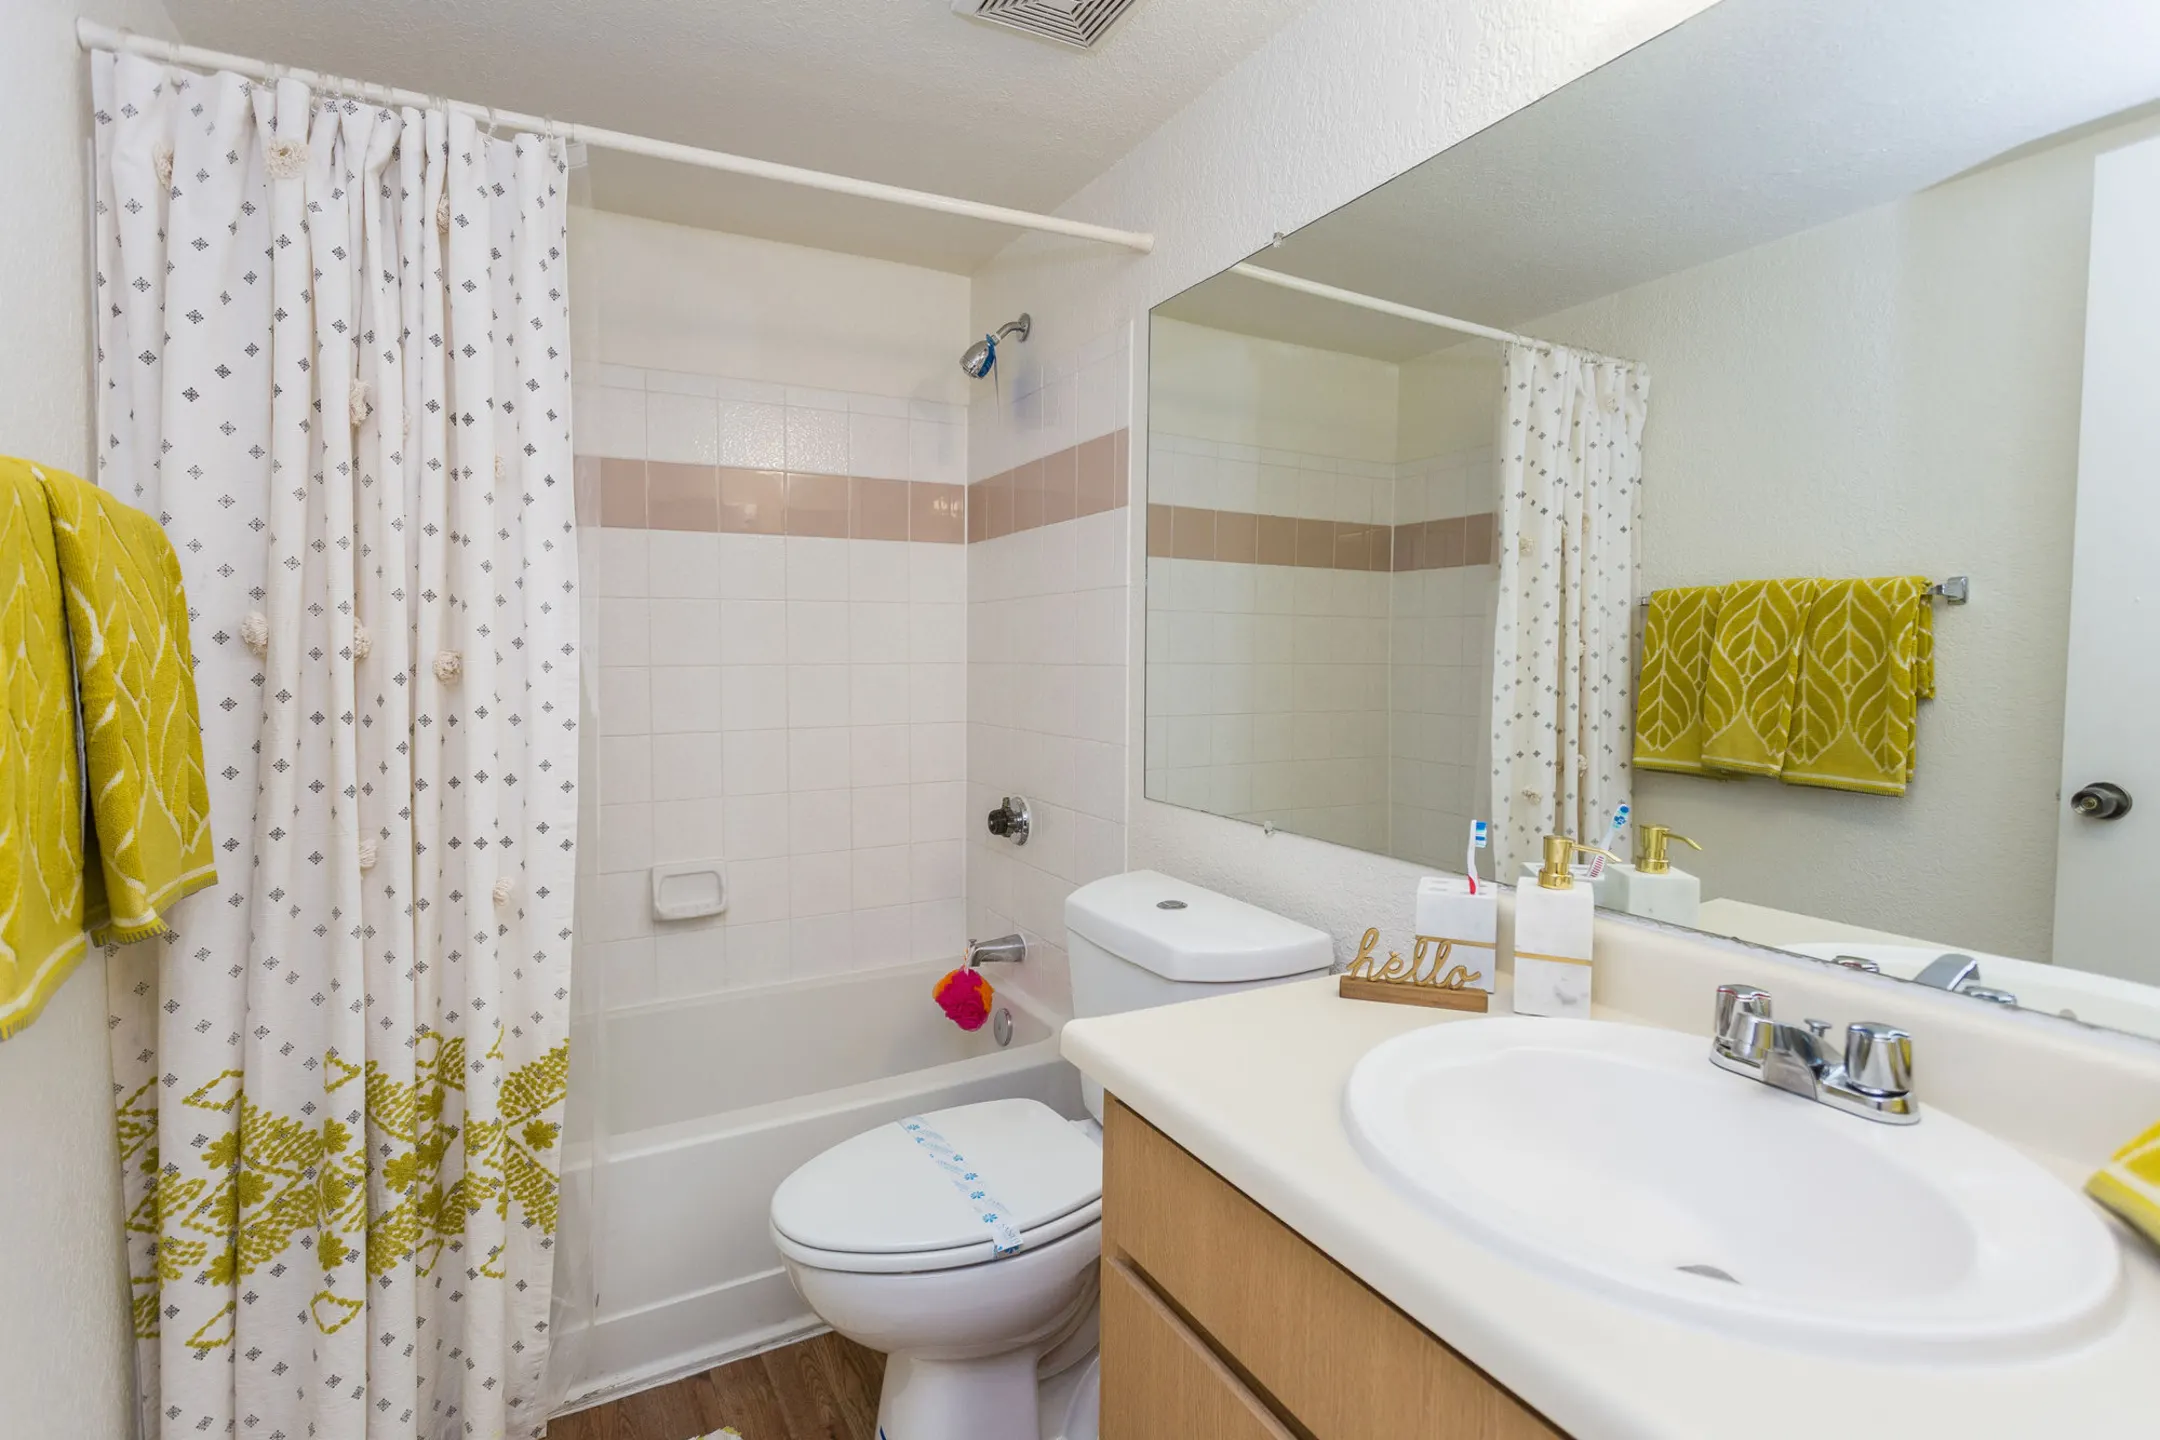 Bathroom - Woodlands Village Apartments - Flagstaff, AZ